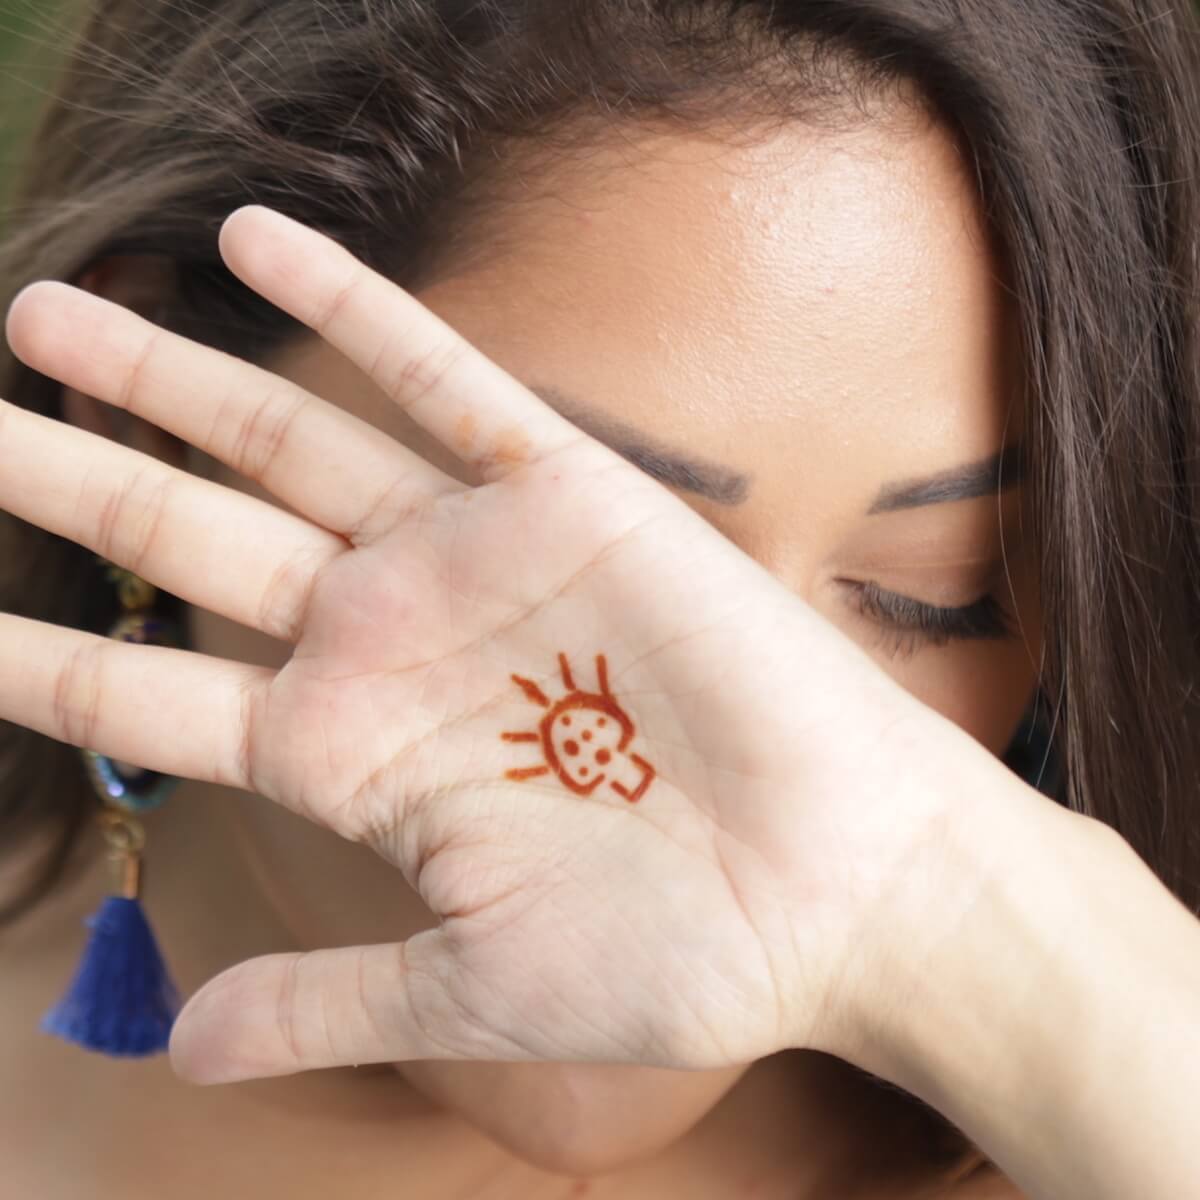 XMASIR Henna Tattoo Kit Stencils, 16 Sheets Temporary Reusable